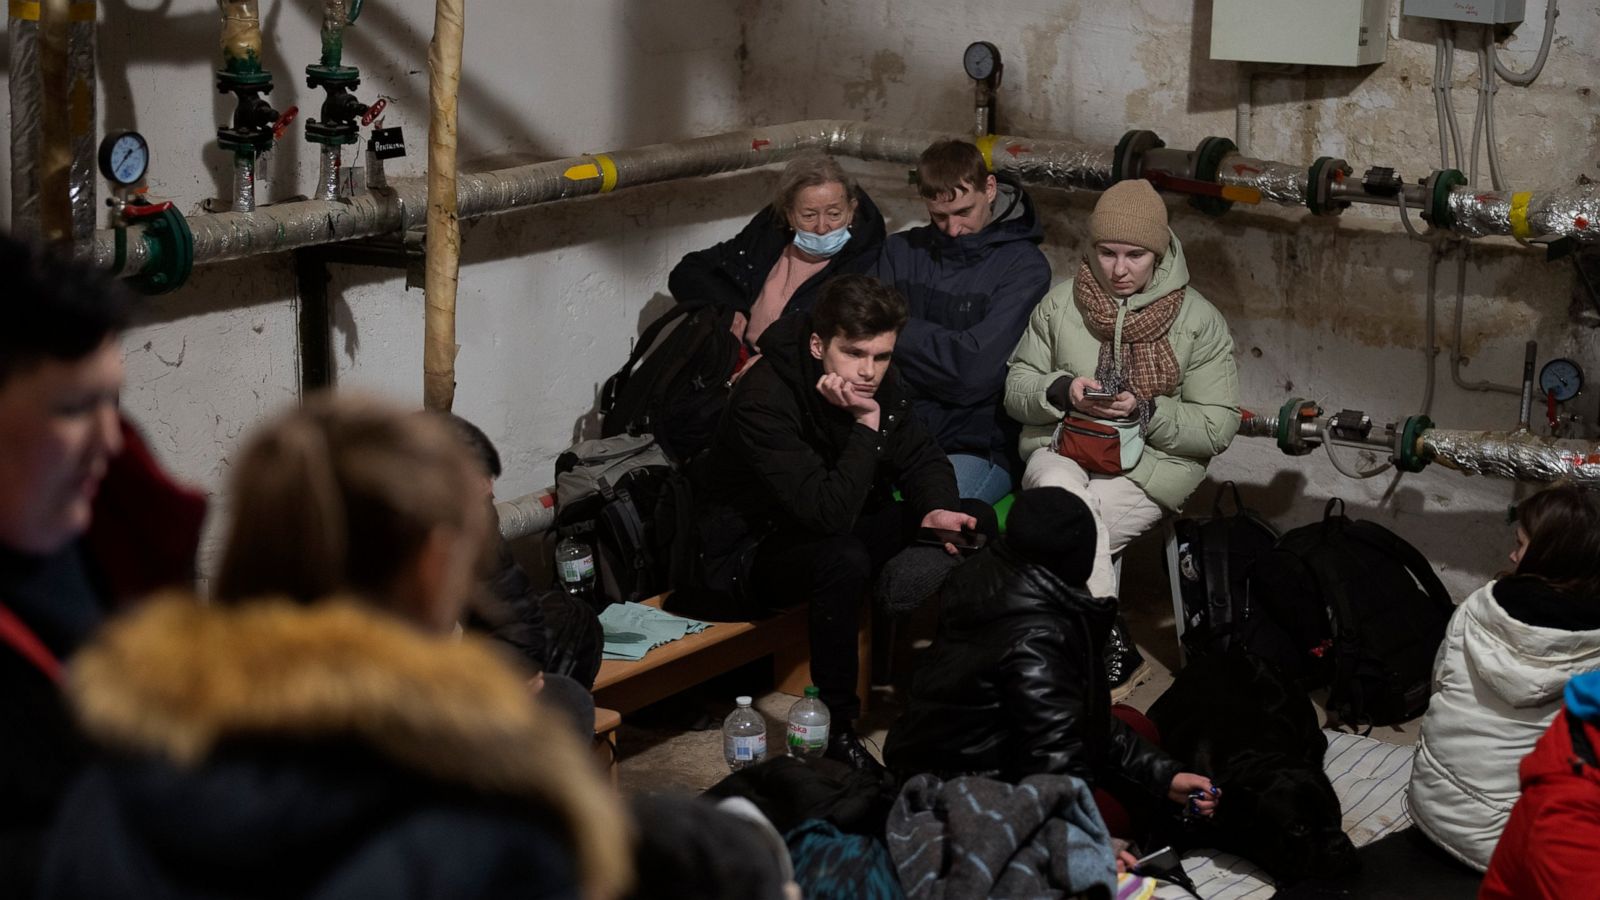 Street fighting begins in Kyiv; people urged to seek shelter - ABC News